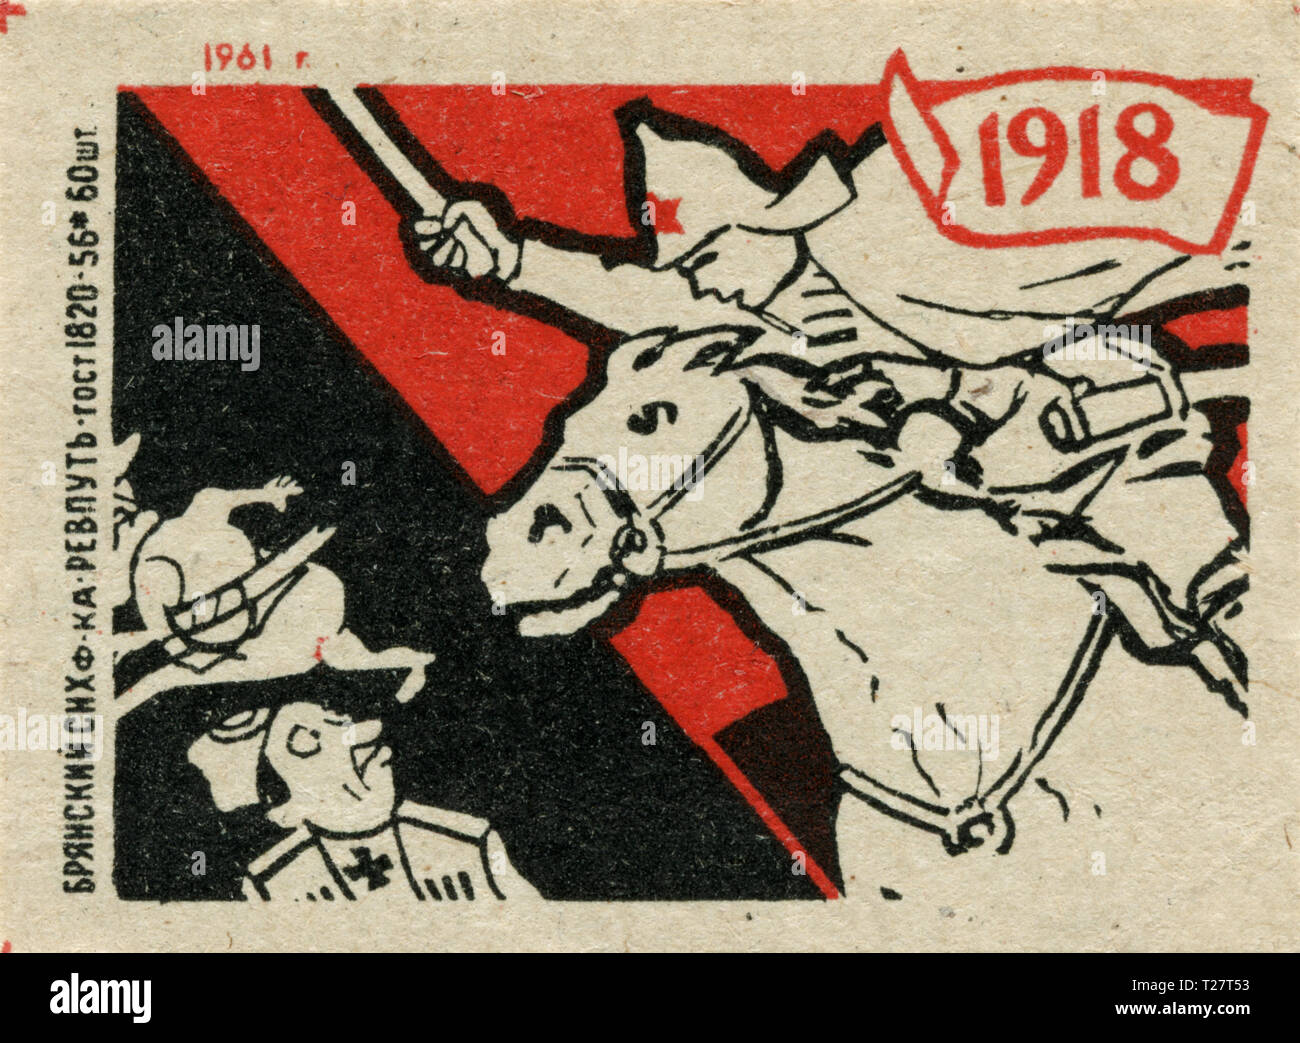 Russia - 1961: Soviet Union propaganda, matchbox graphics, WW1 victory Stock Photo